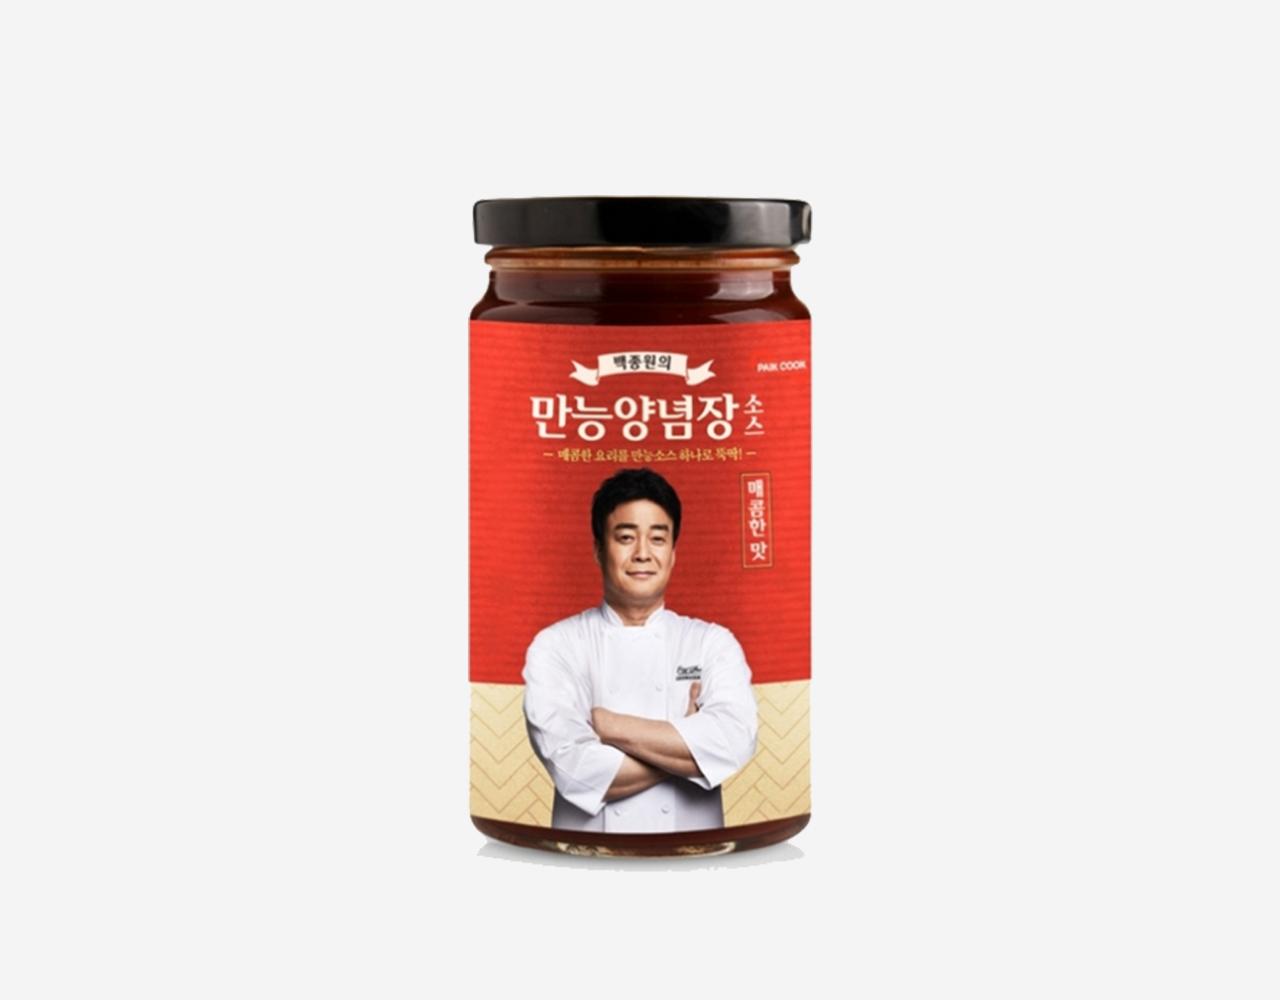 PAIKCOOK All-Purpose Spicy Marinade Sauce by Baek Jongwon